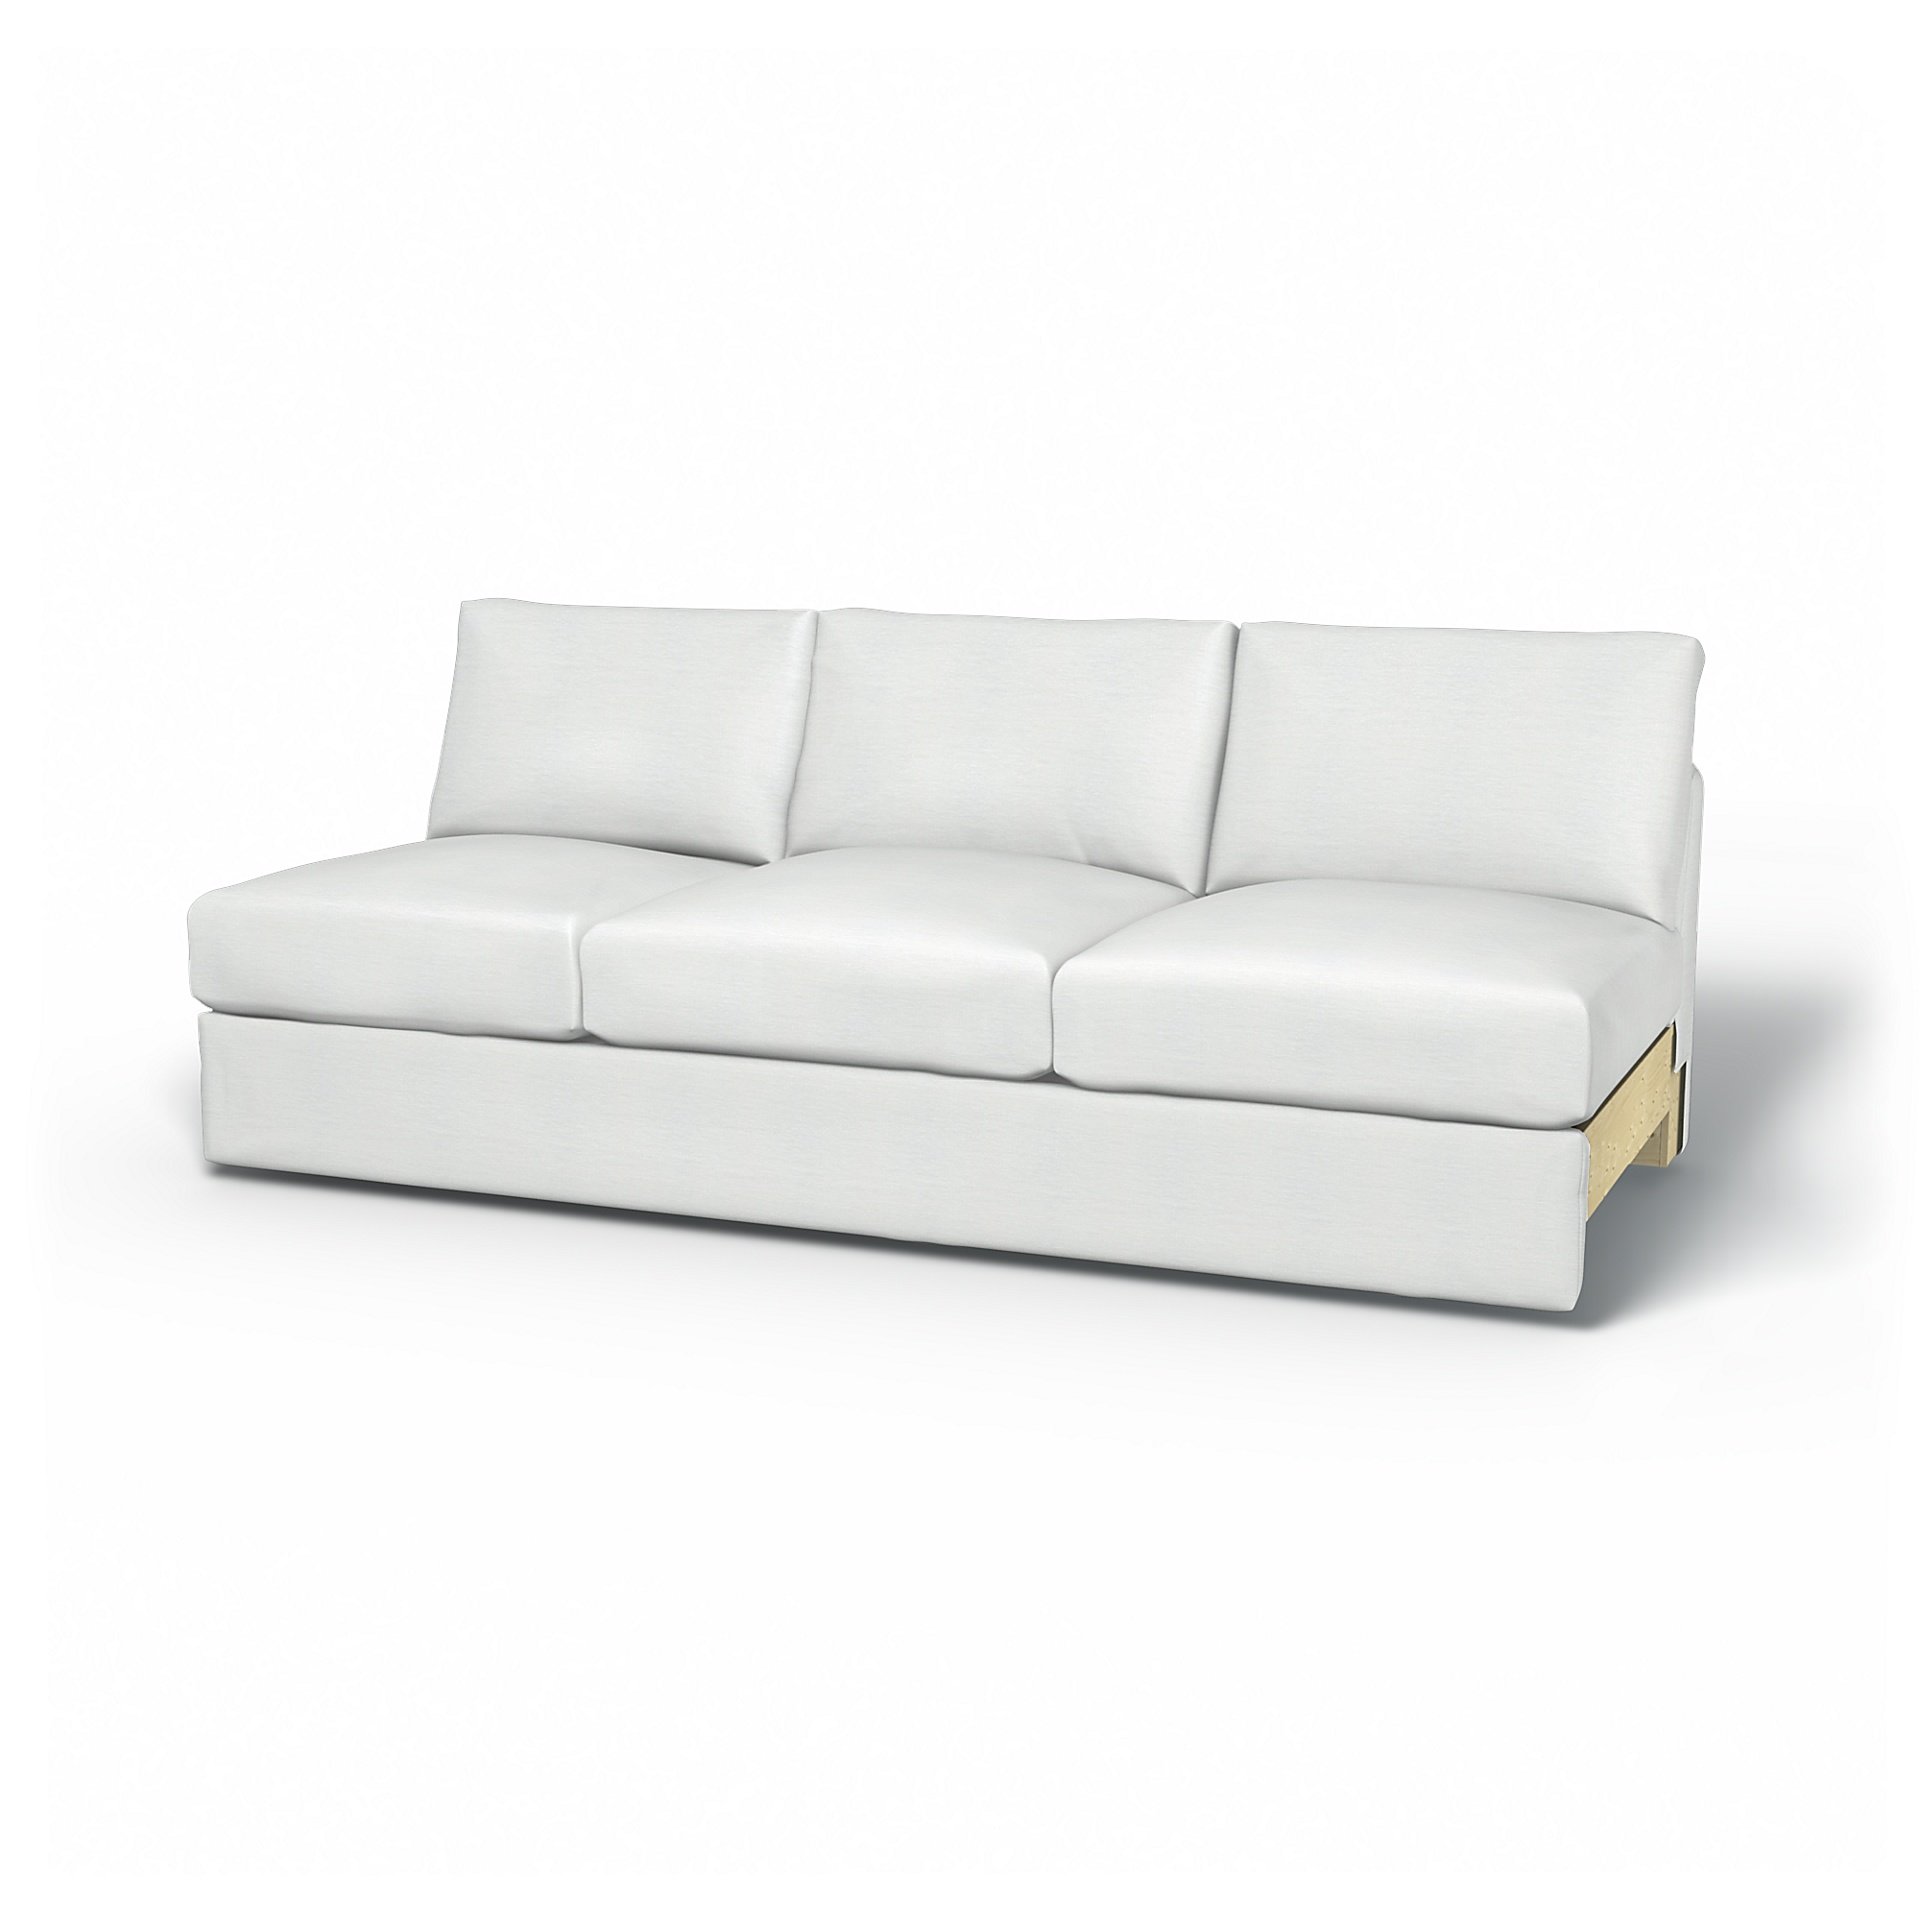 IKEA - Vimle 3 Seat Section Cover, White, Linen - Bemz